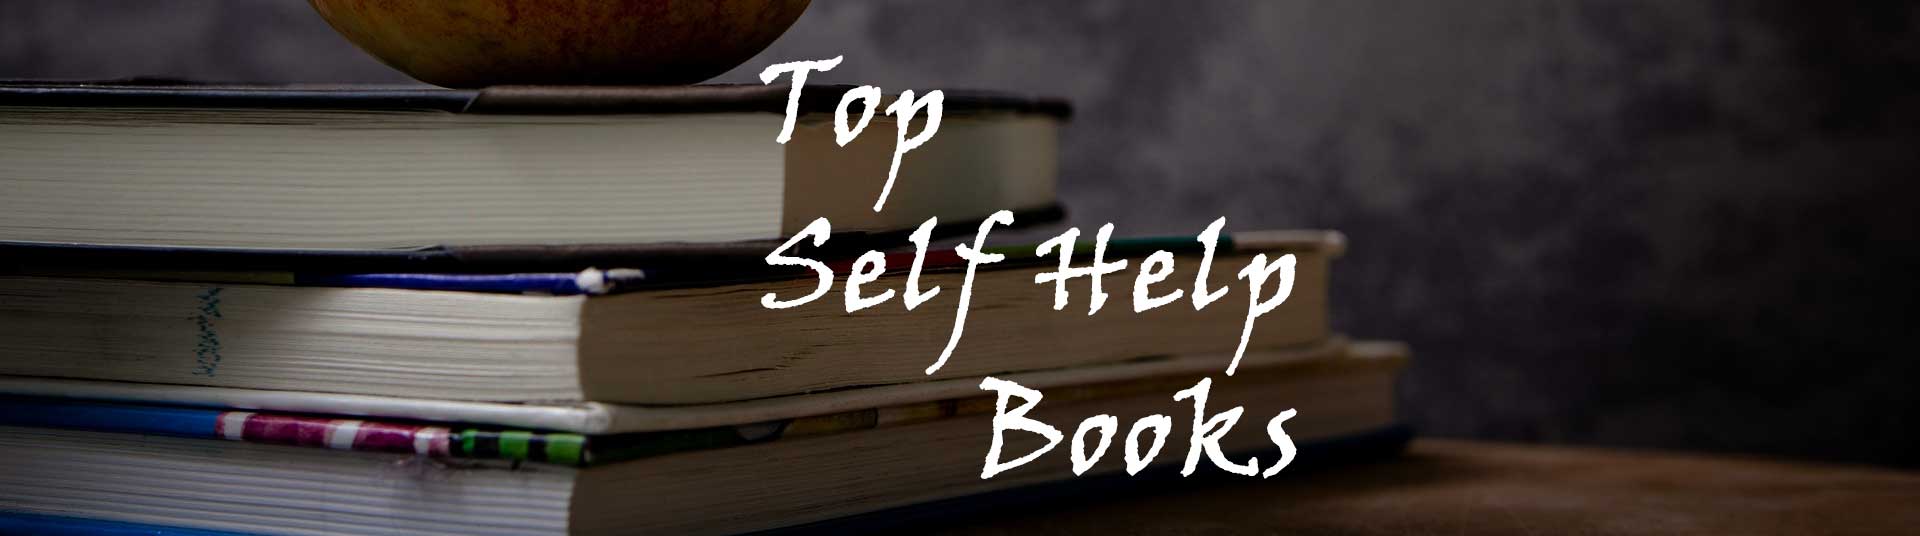 Top Self Help Books